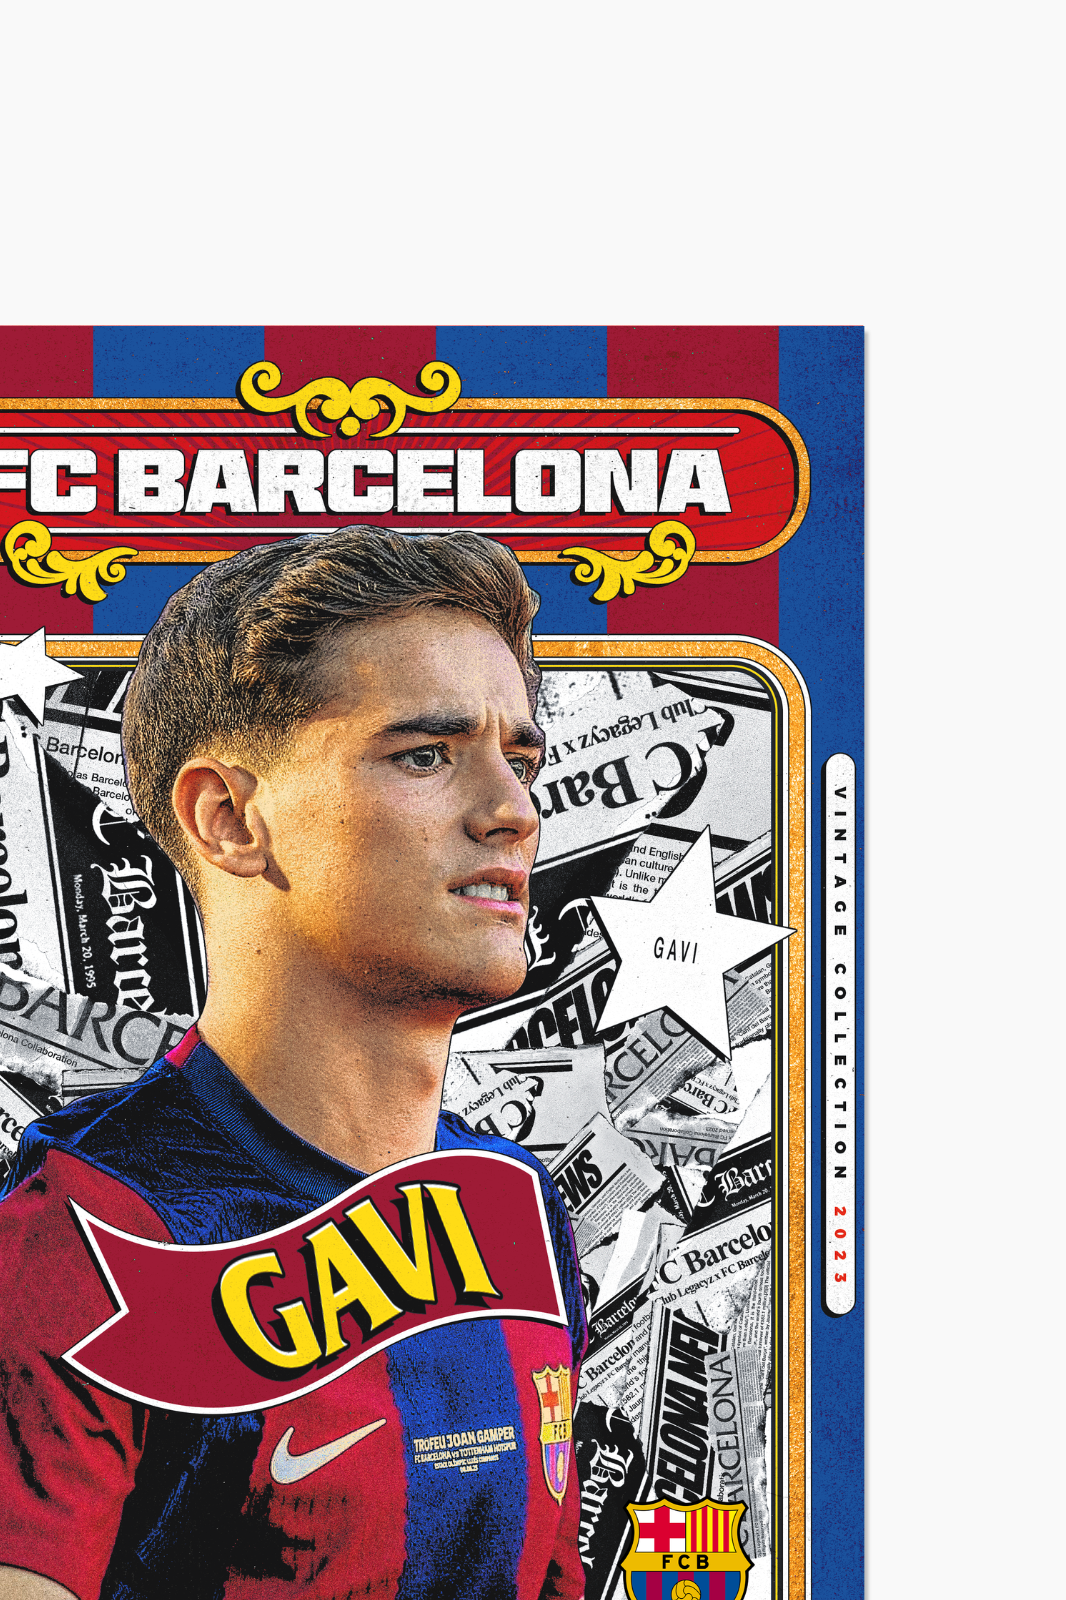 FC Barcelona - Gavi Retro Poster limited to 100